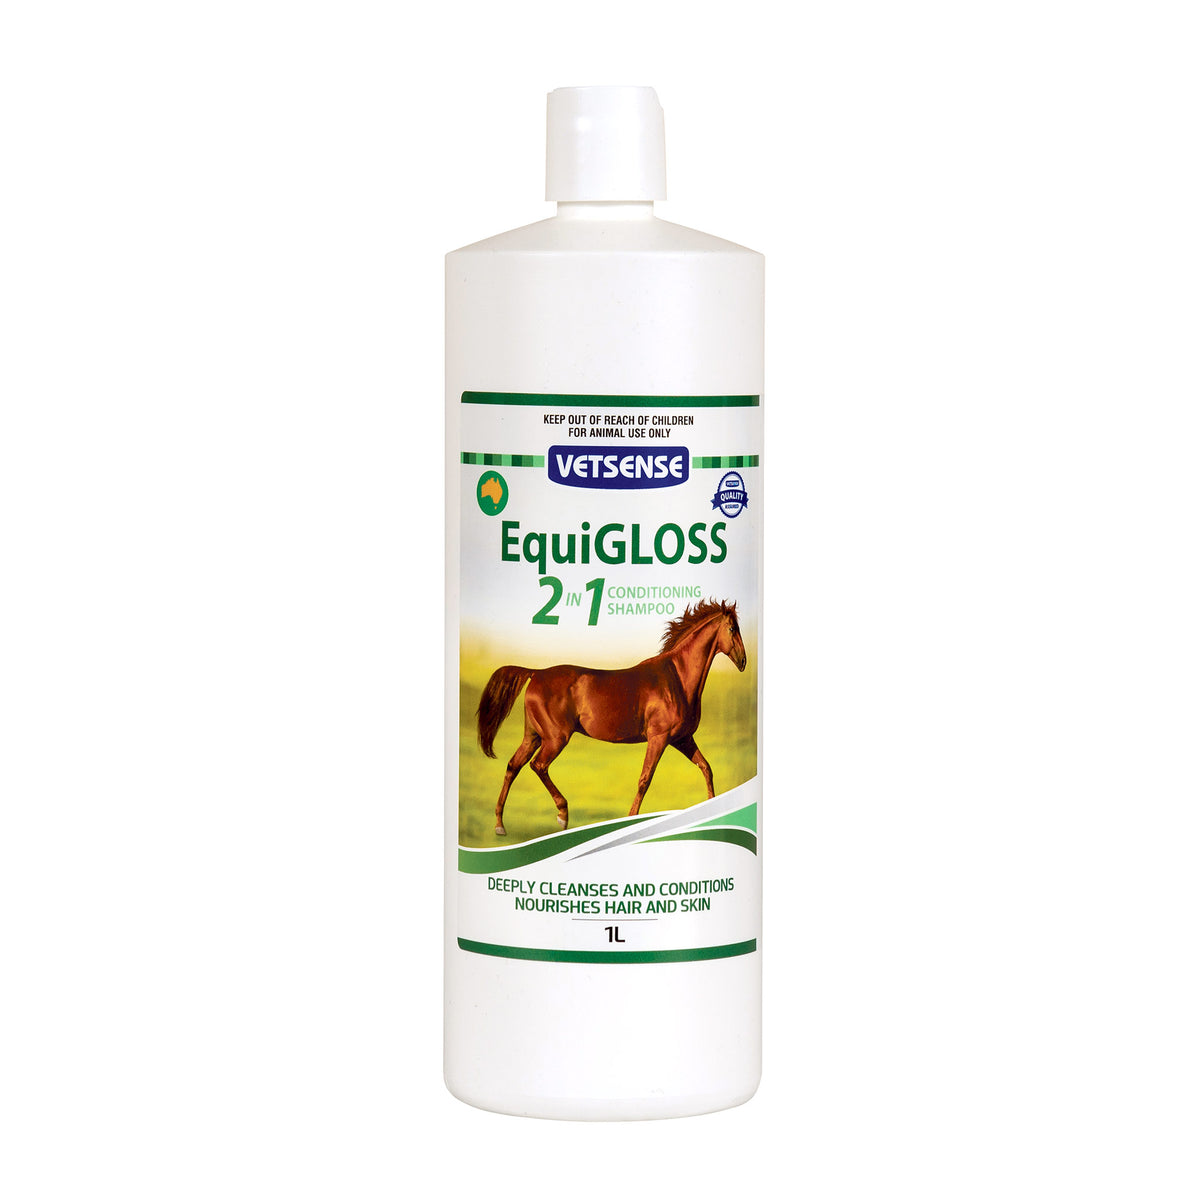 Vetsense EquiGLOSS 2 in 1 Conditioning Shampoo